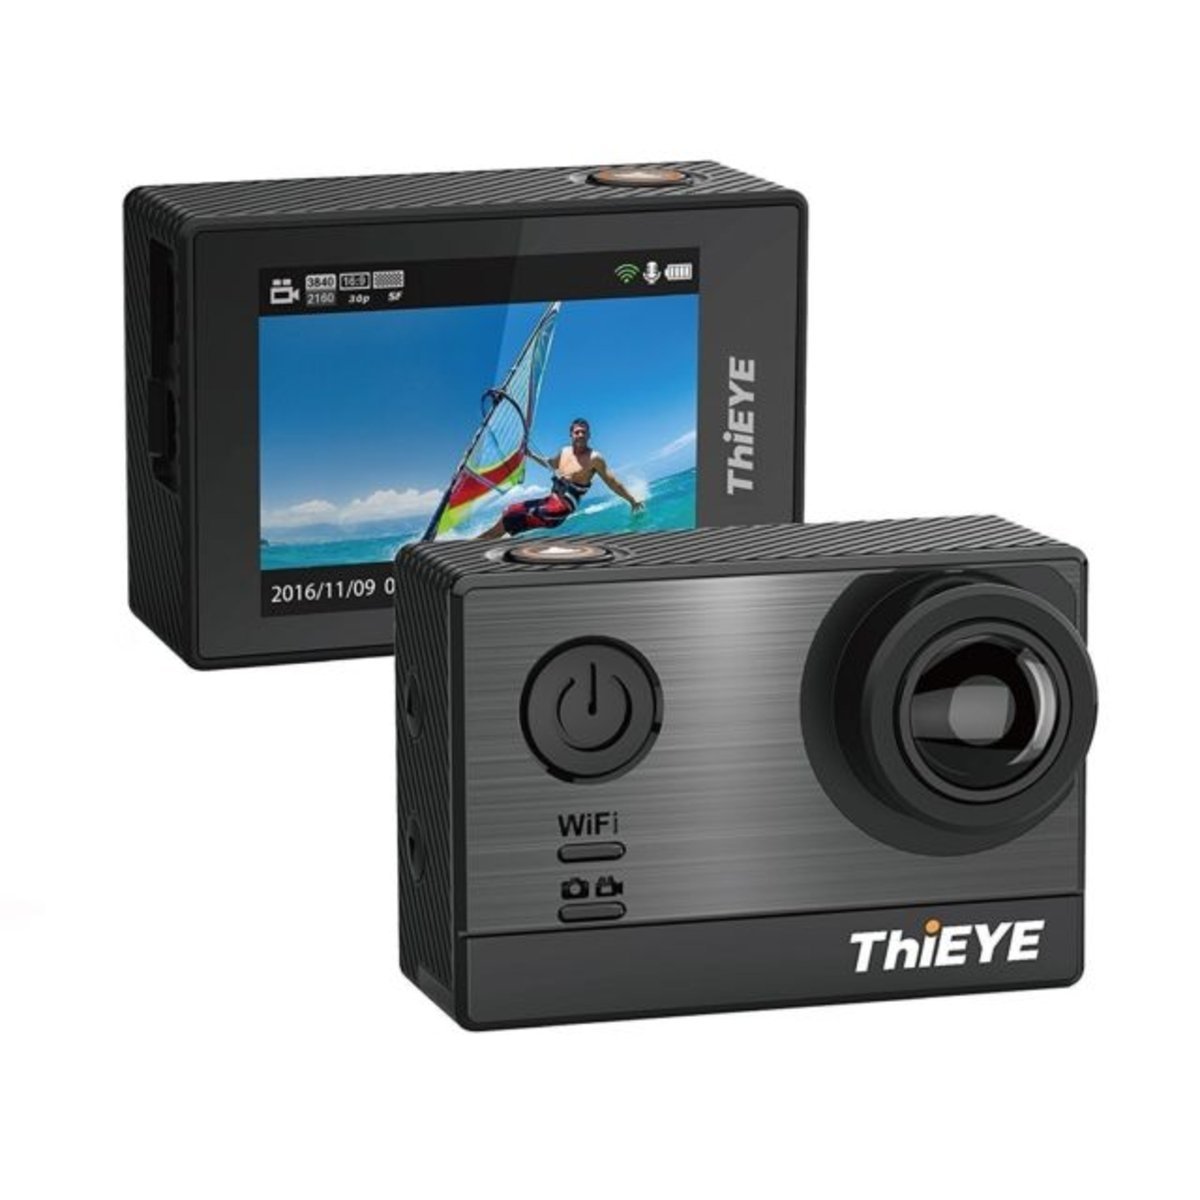 Thieye actioncam